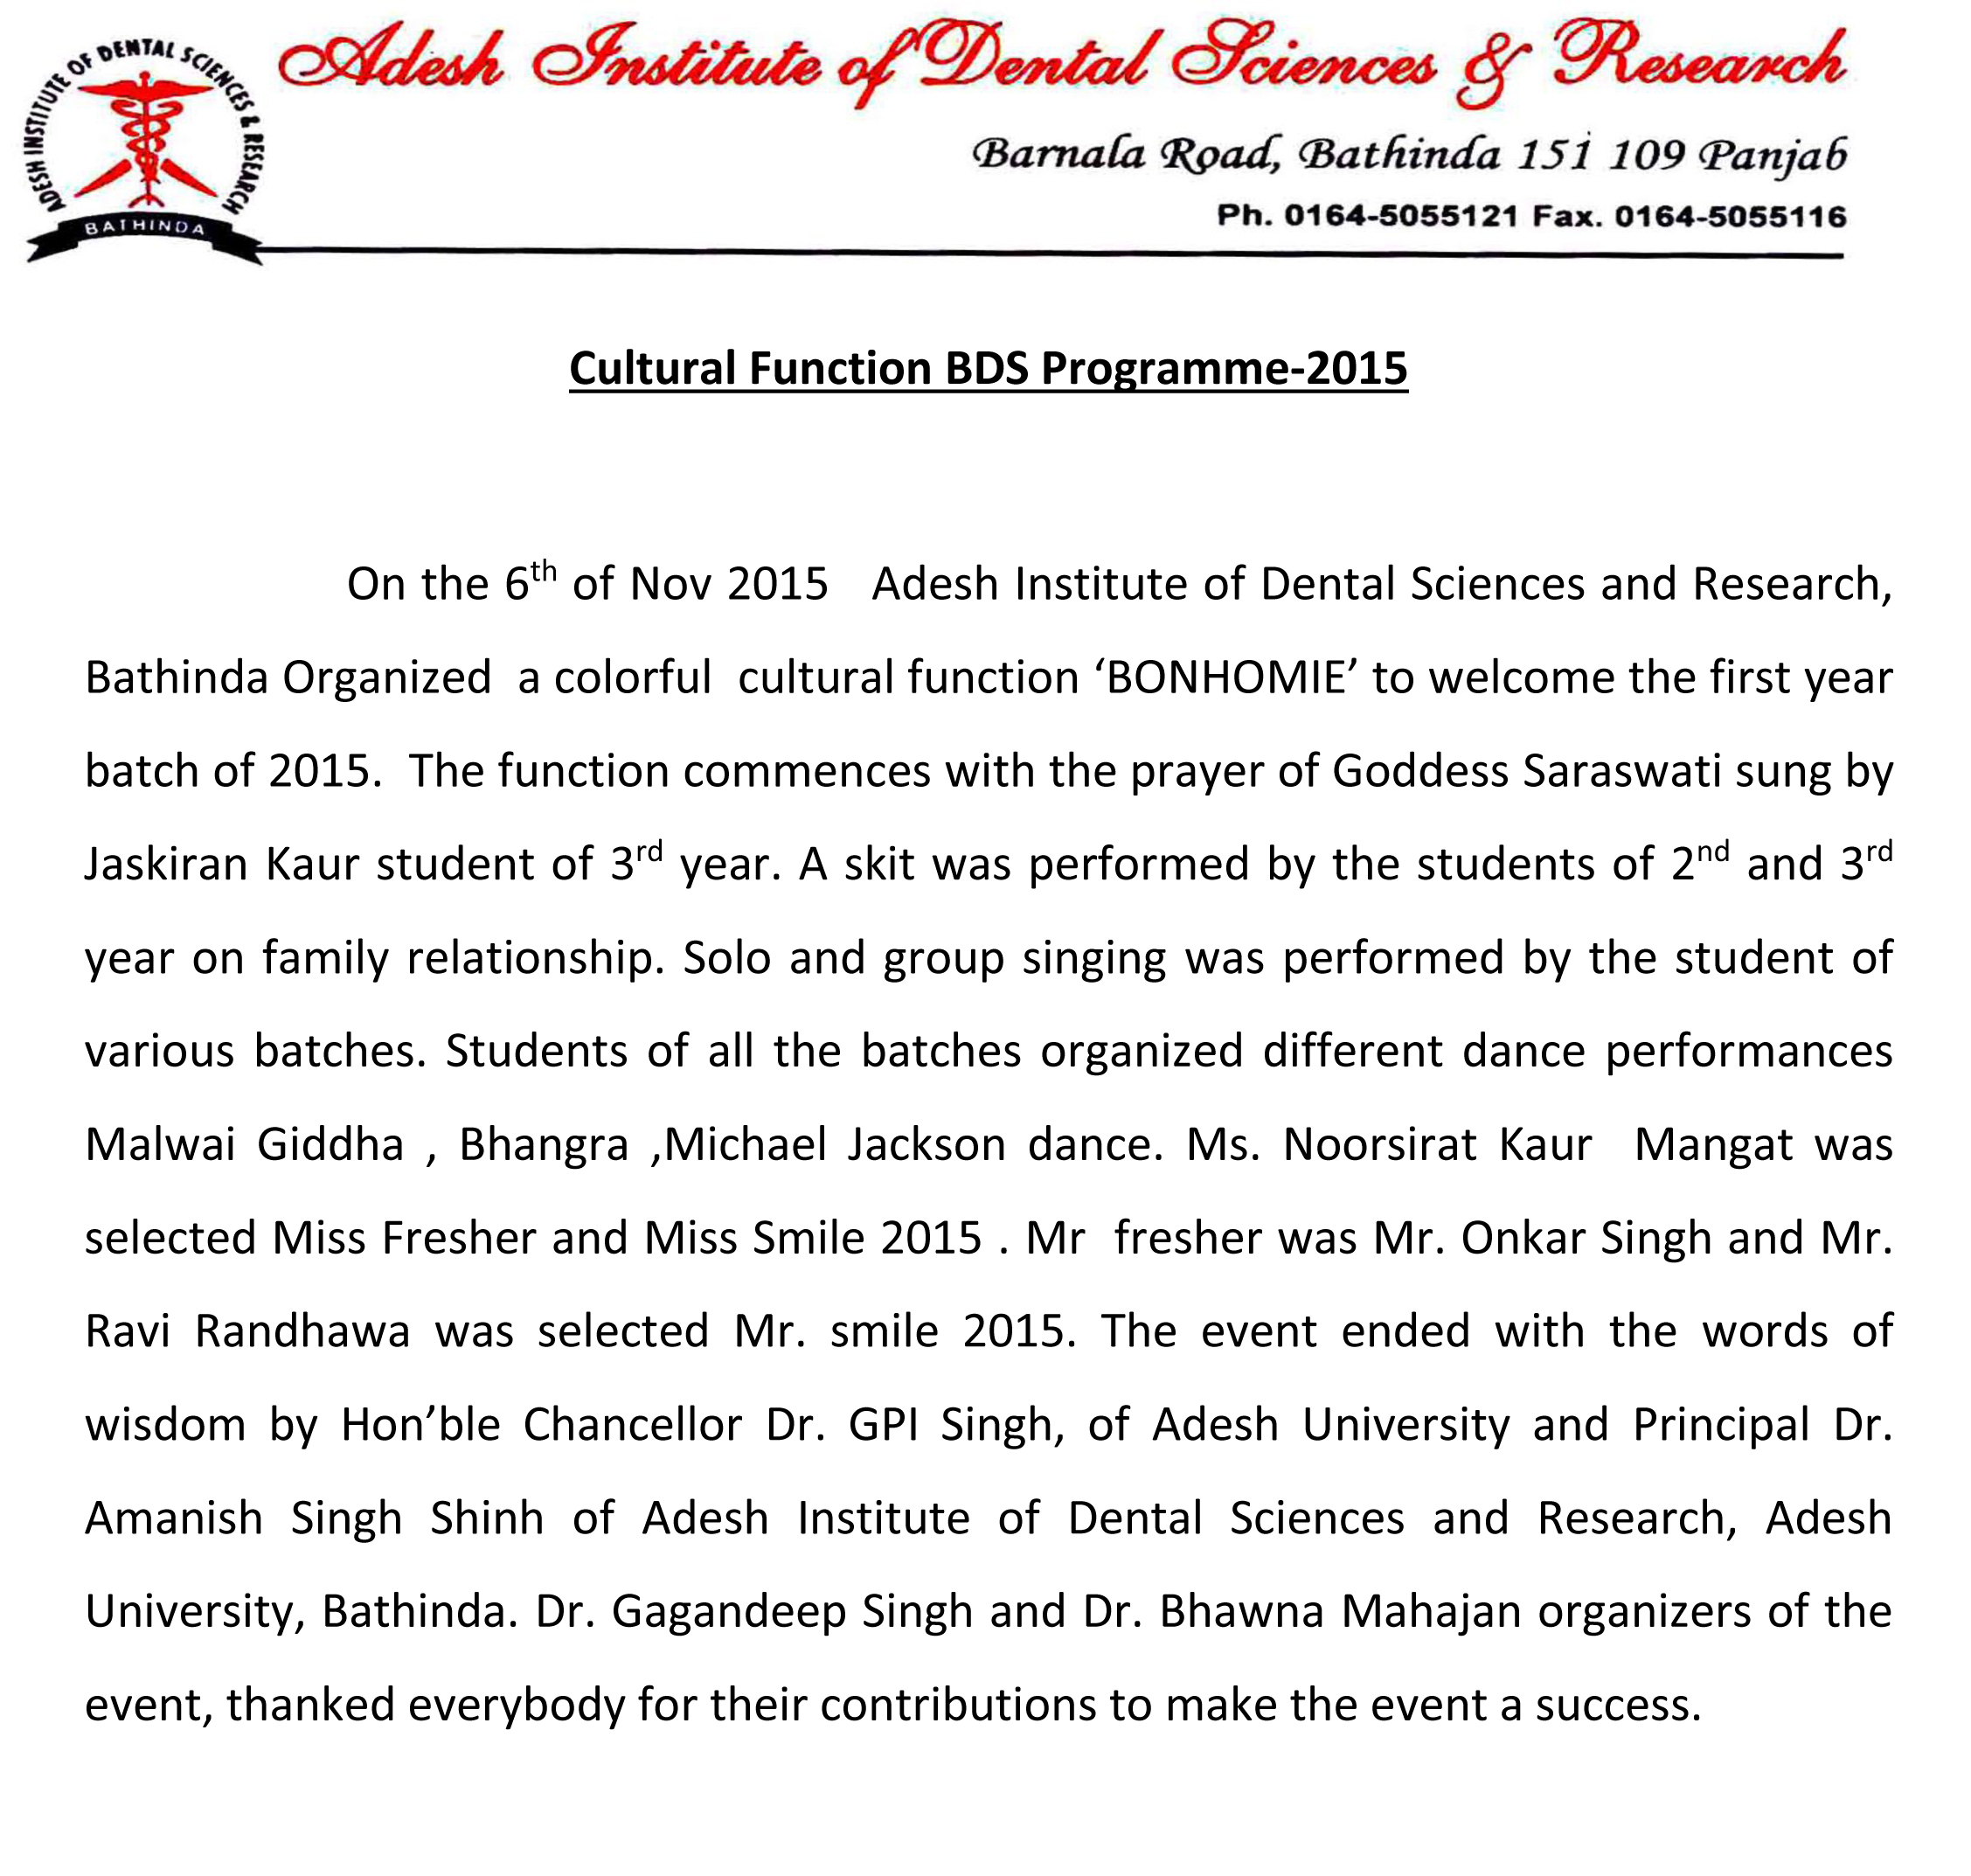 Cultural Function BDS Programme-2015